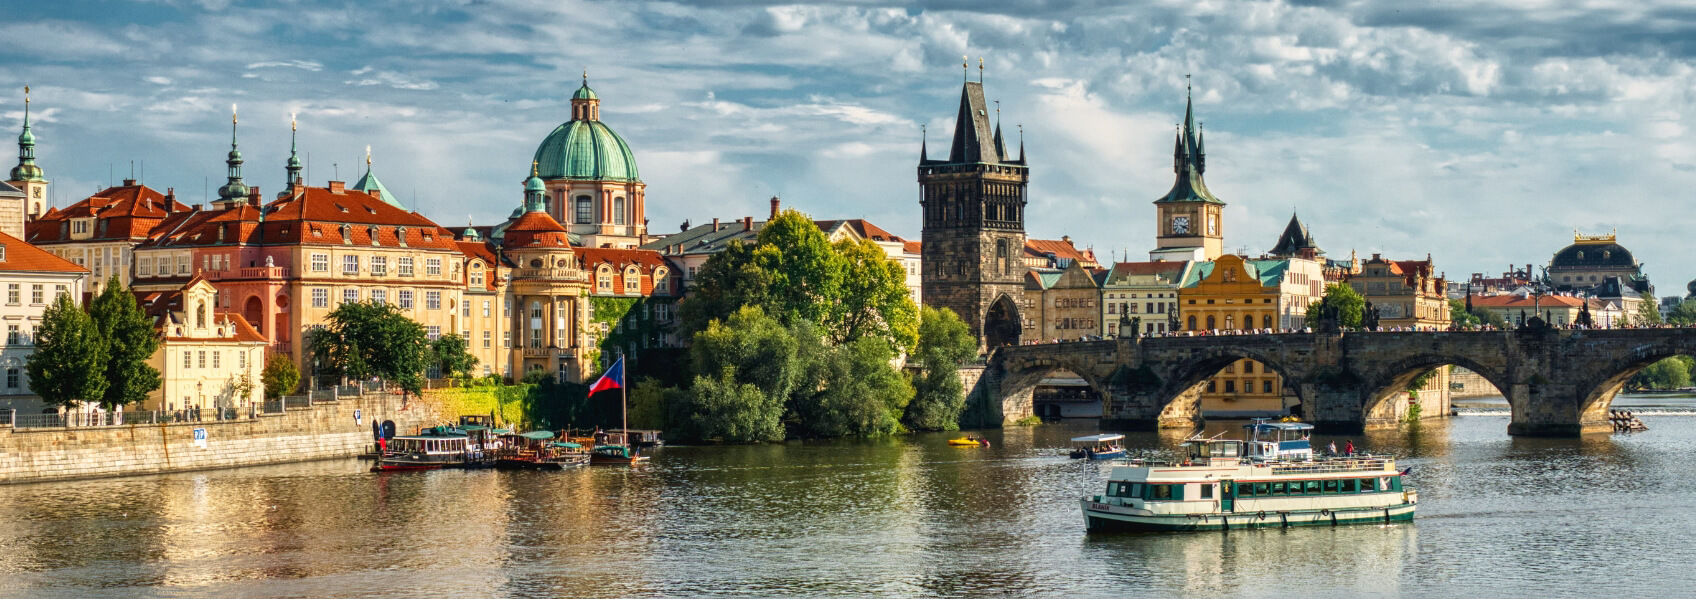 Kam v Praze a okolí na výlet? 28 tipů kam vyrazit